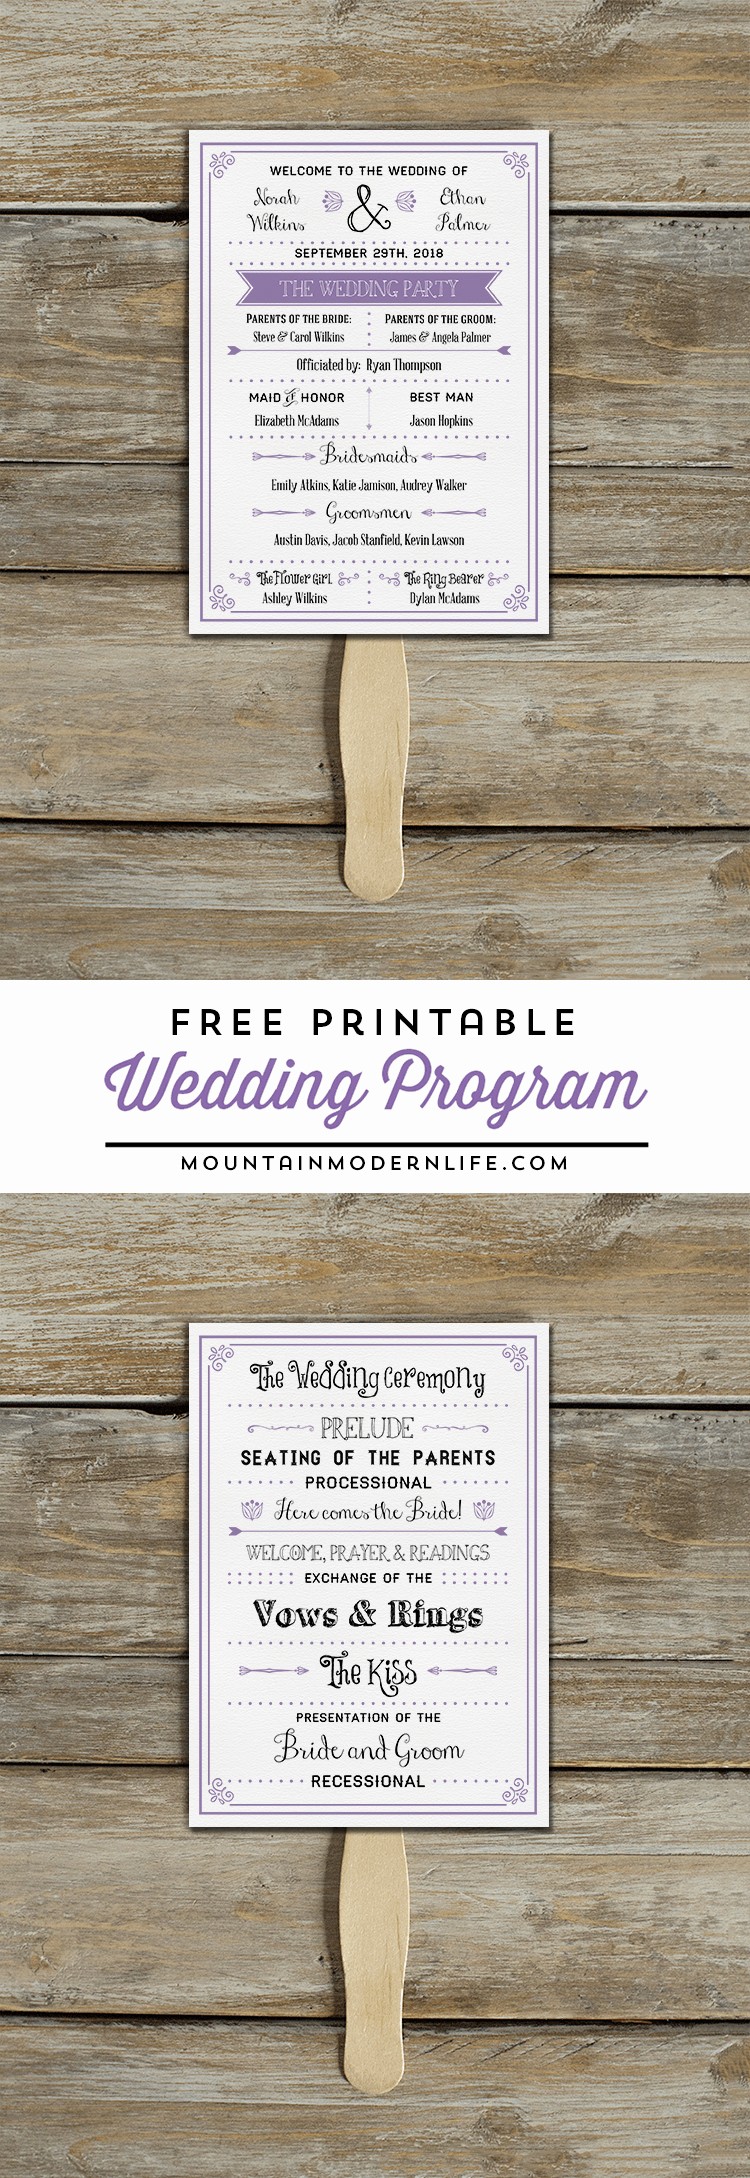 Free Wedding Program Template Downloads Unique Free Printable Wedding Program